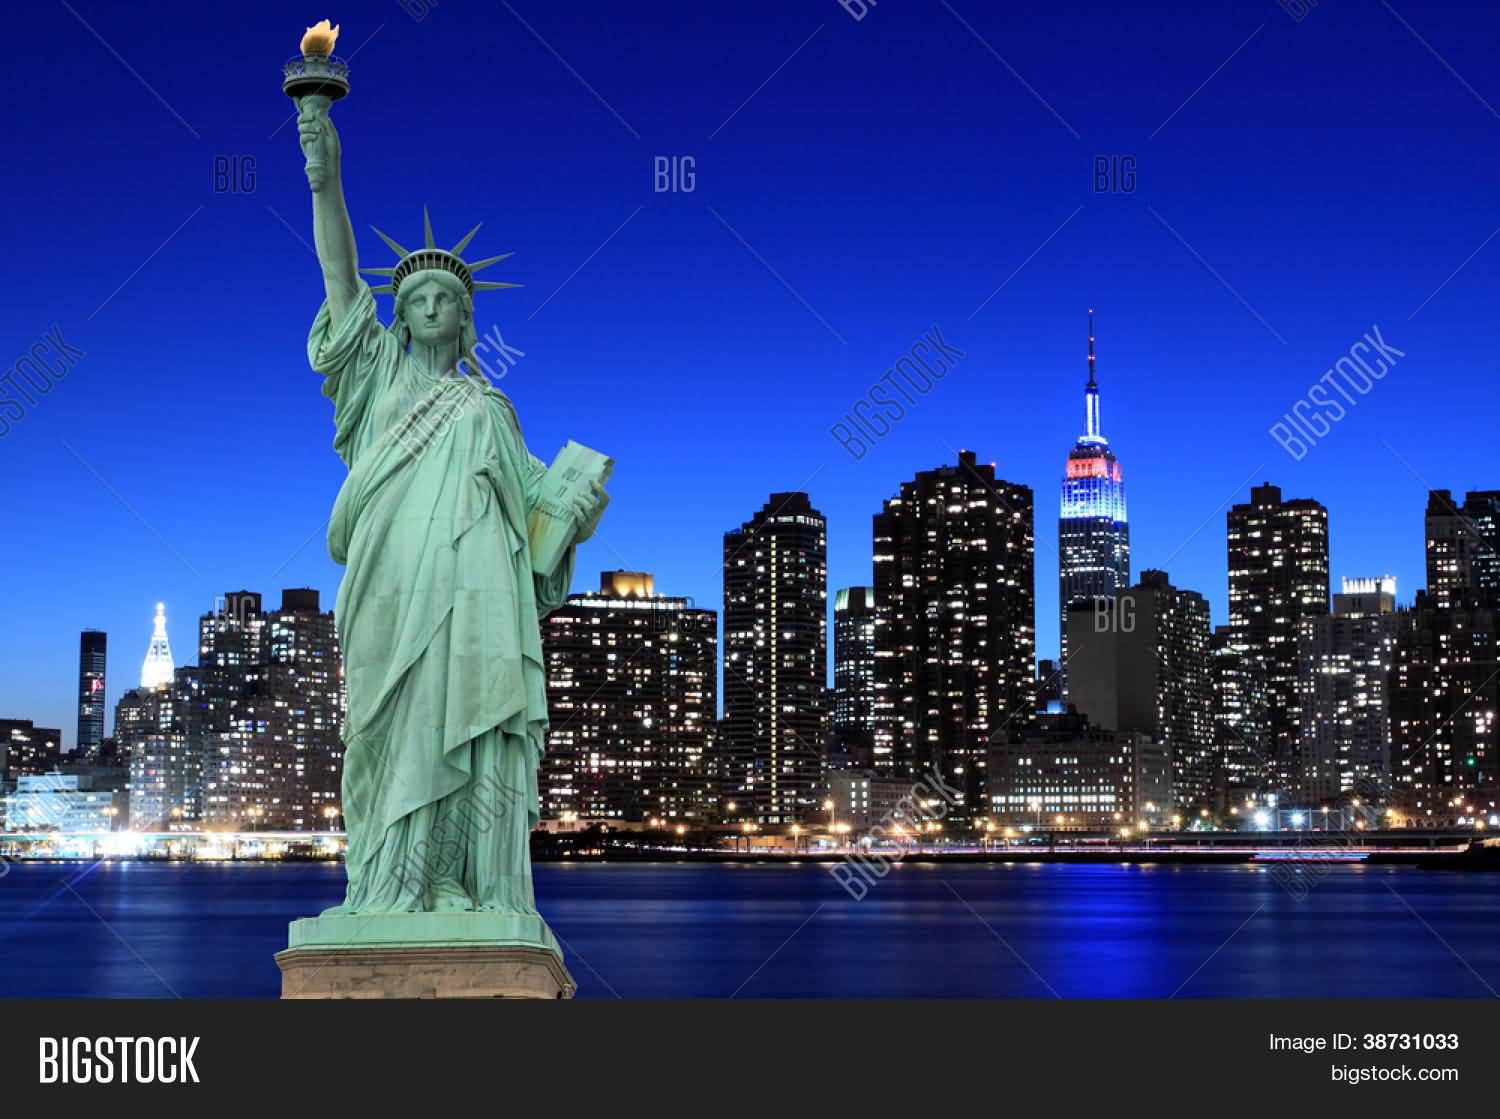 Manhattan Skyline And Statue Of Liberty Looks Amazing With Night Lights